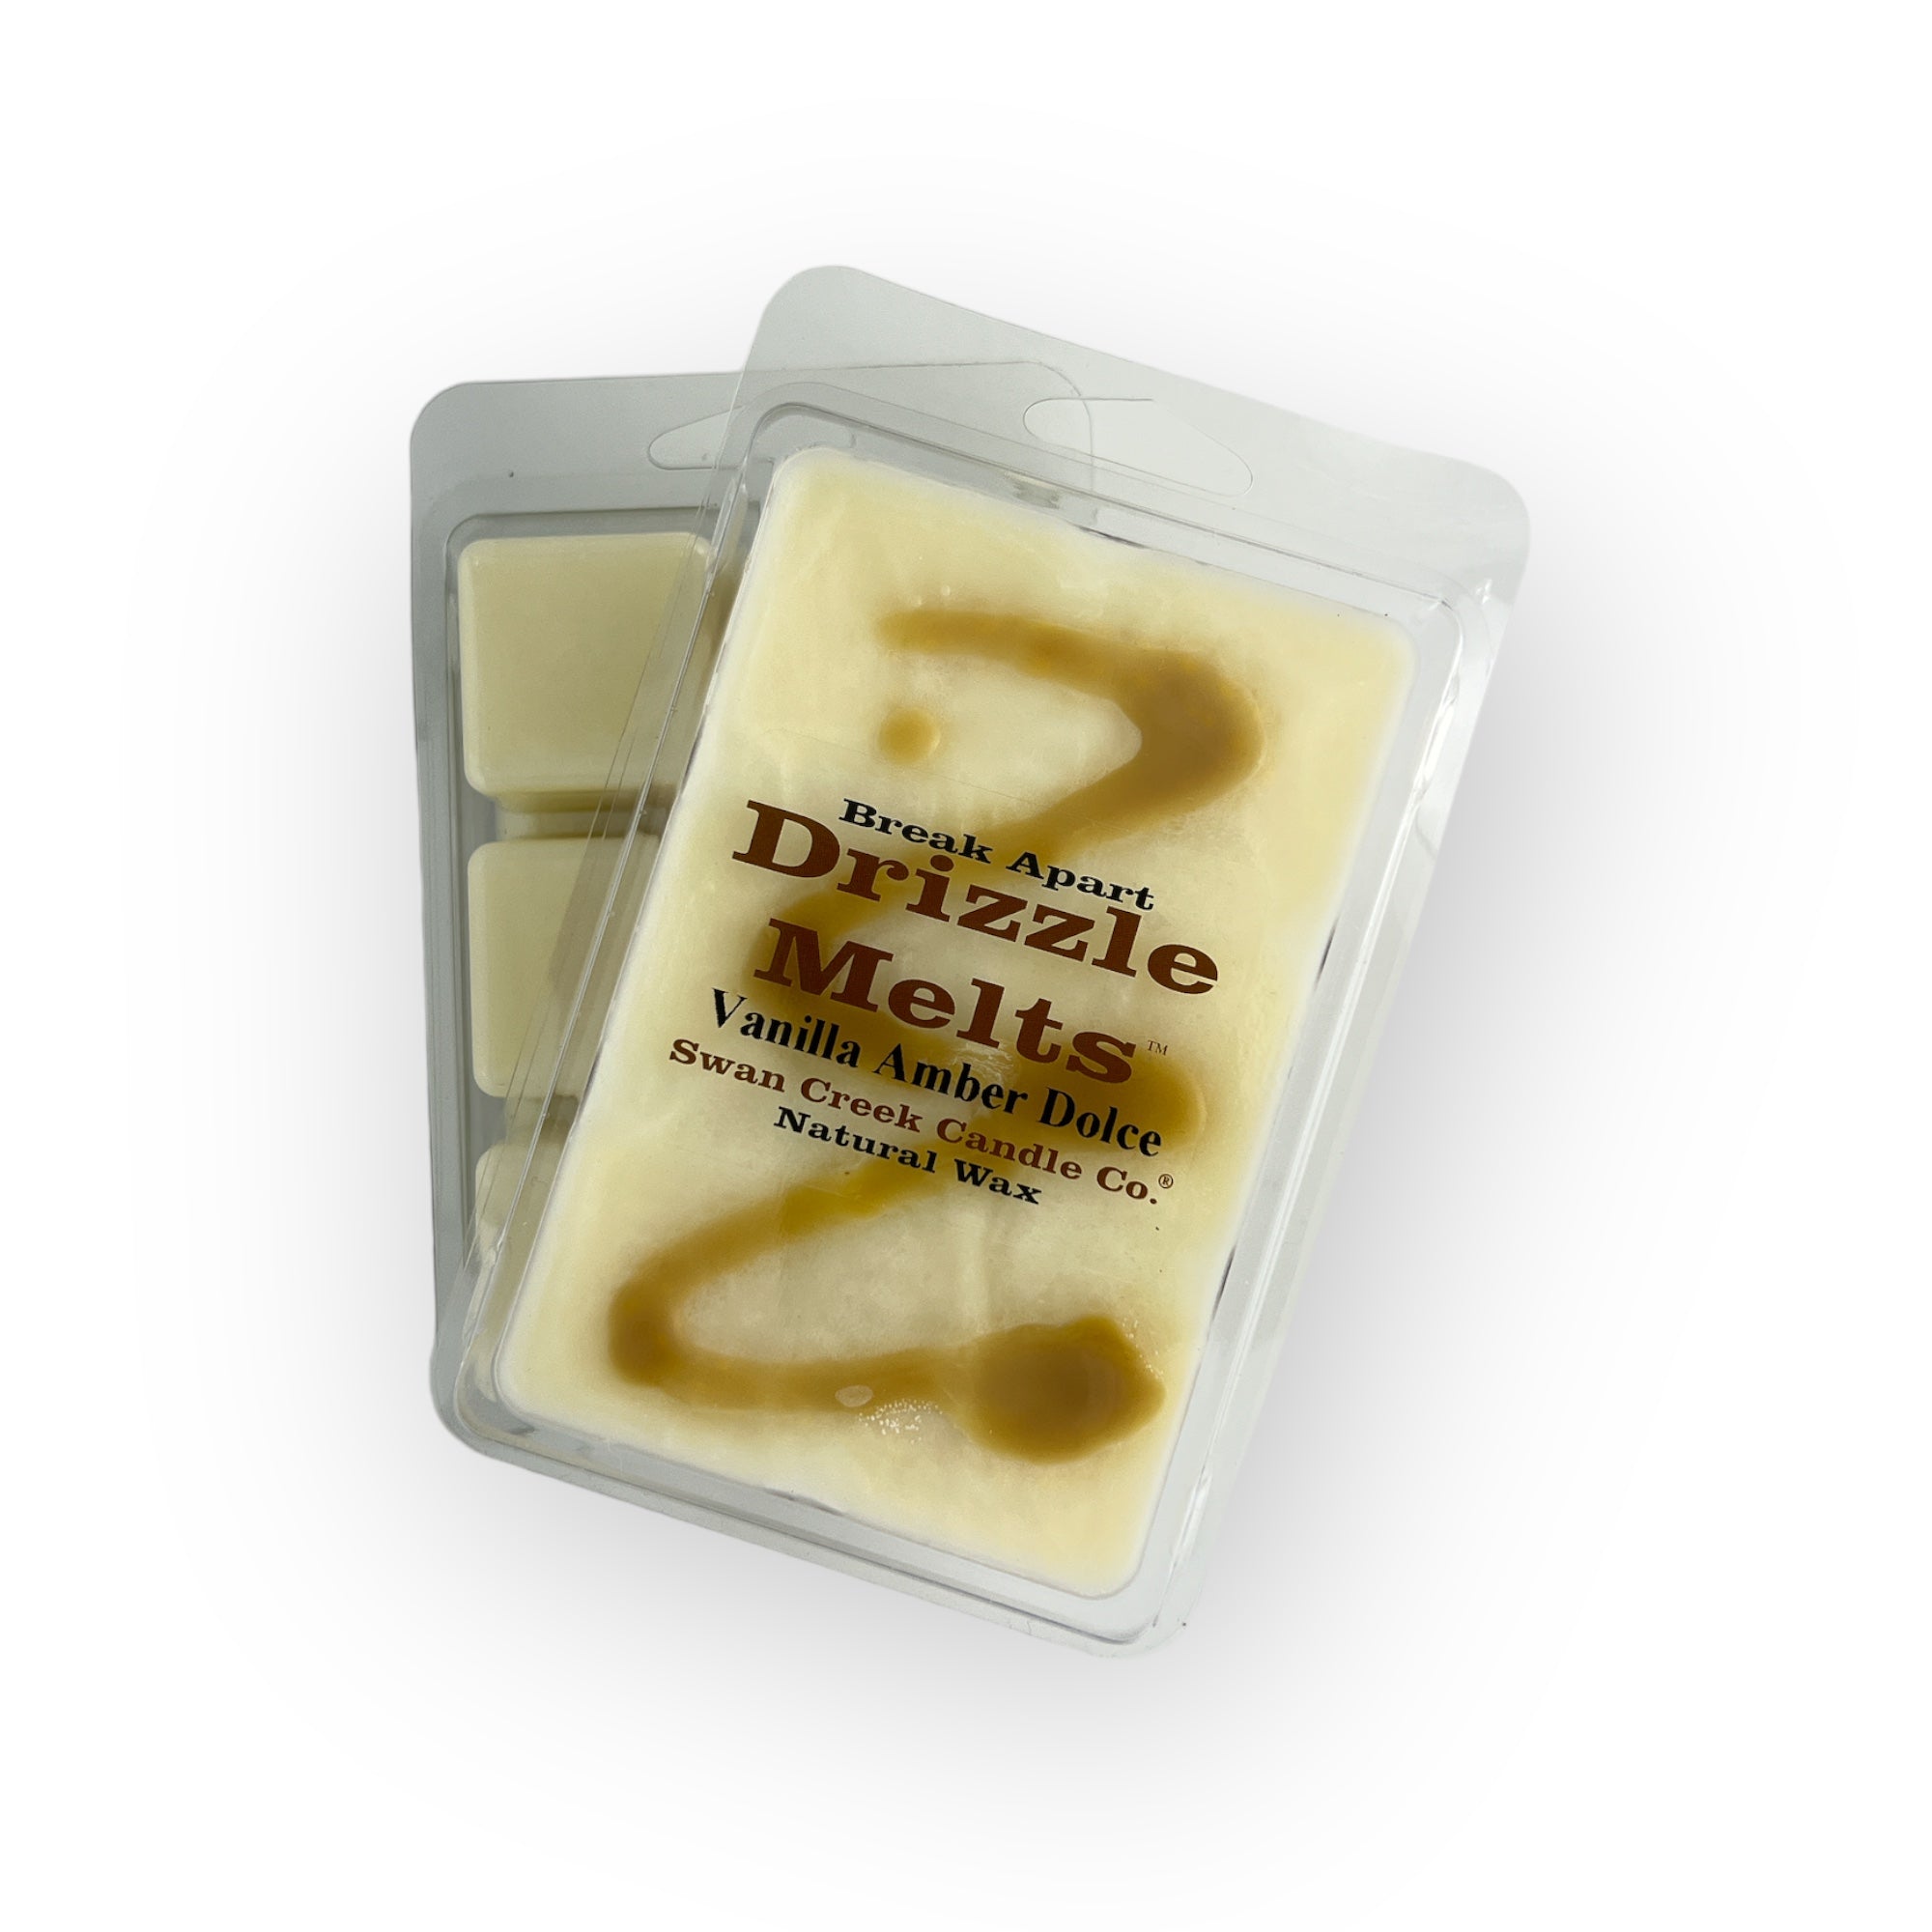 Swan Creek Drizzle Melts - Vanilla Amber Dolce